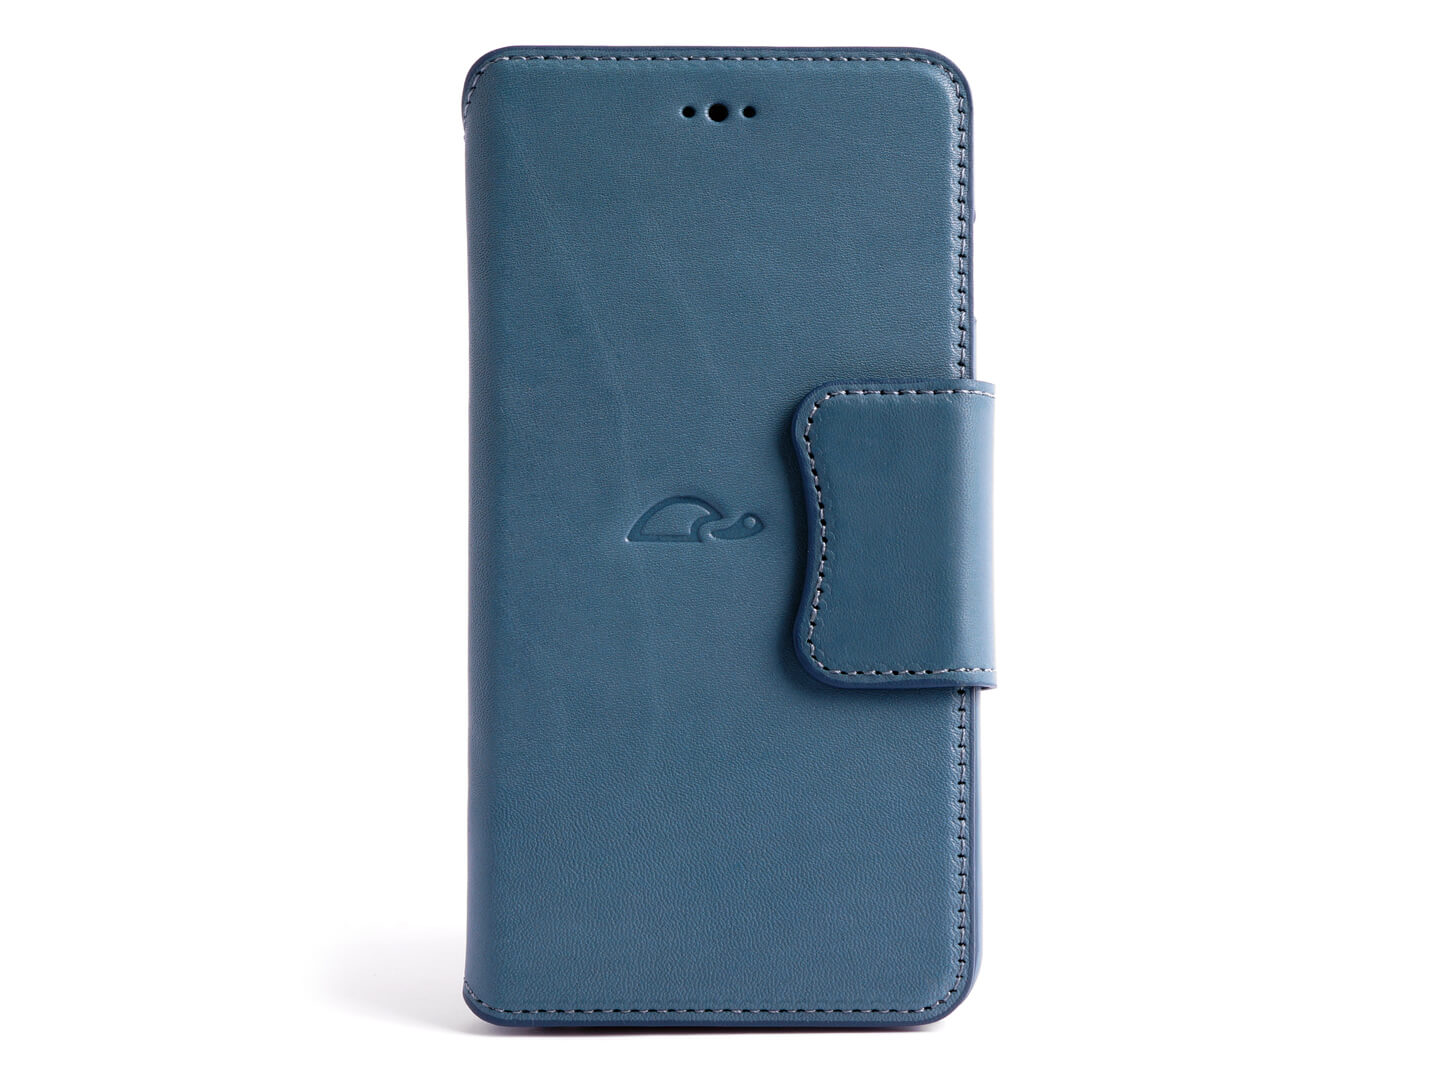 iPhone 6 Plus wallet case leather blue - front - Carapaz